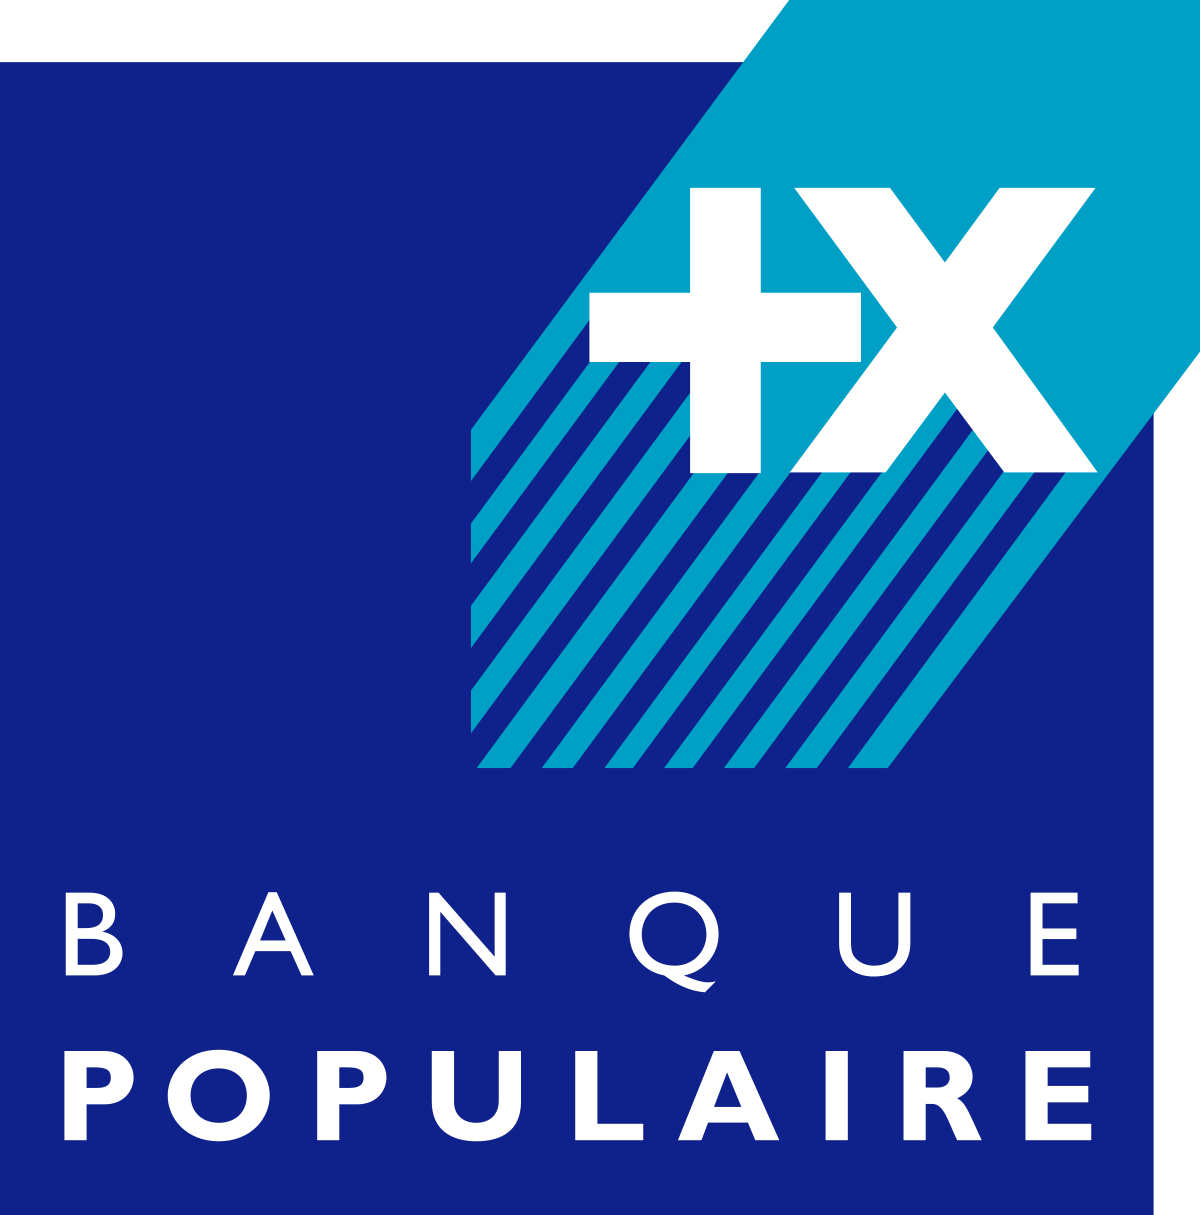 Banque populaire logo